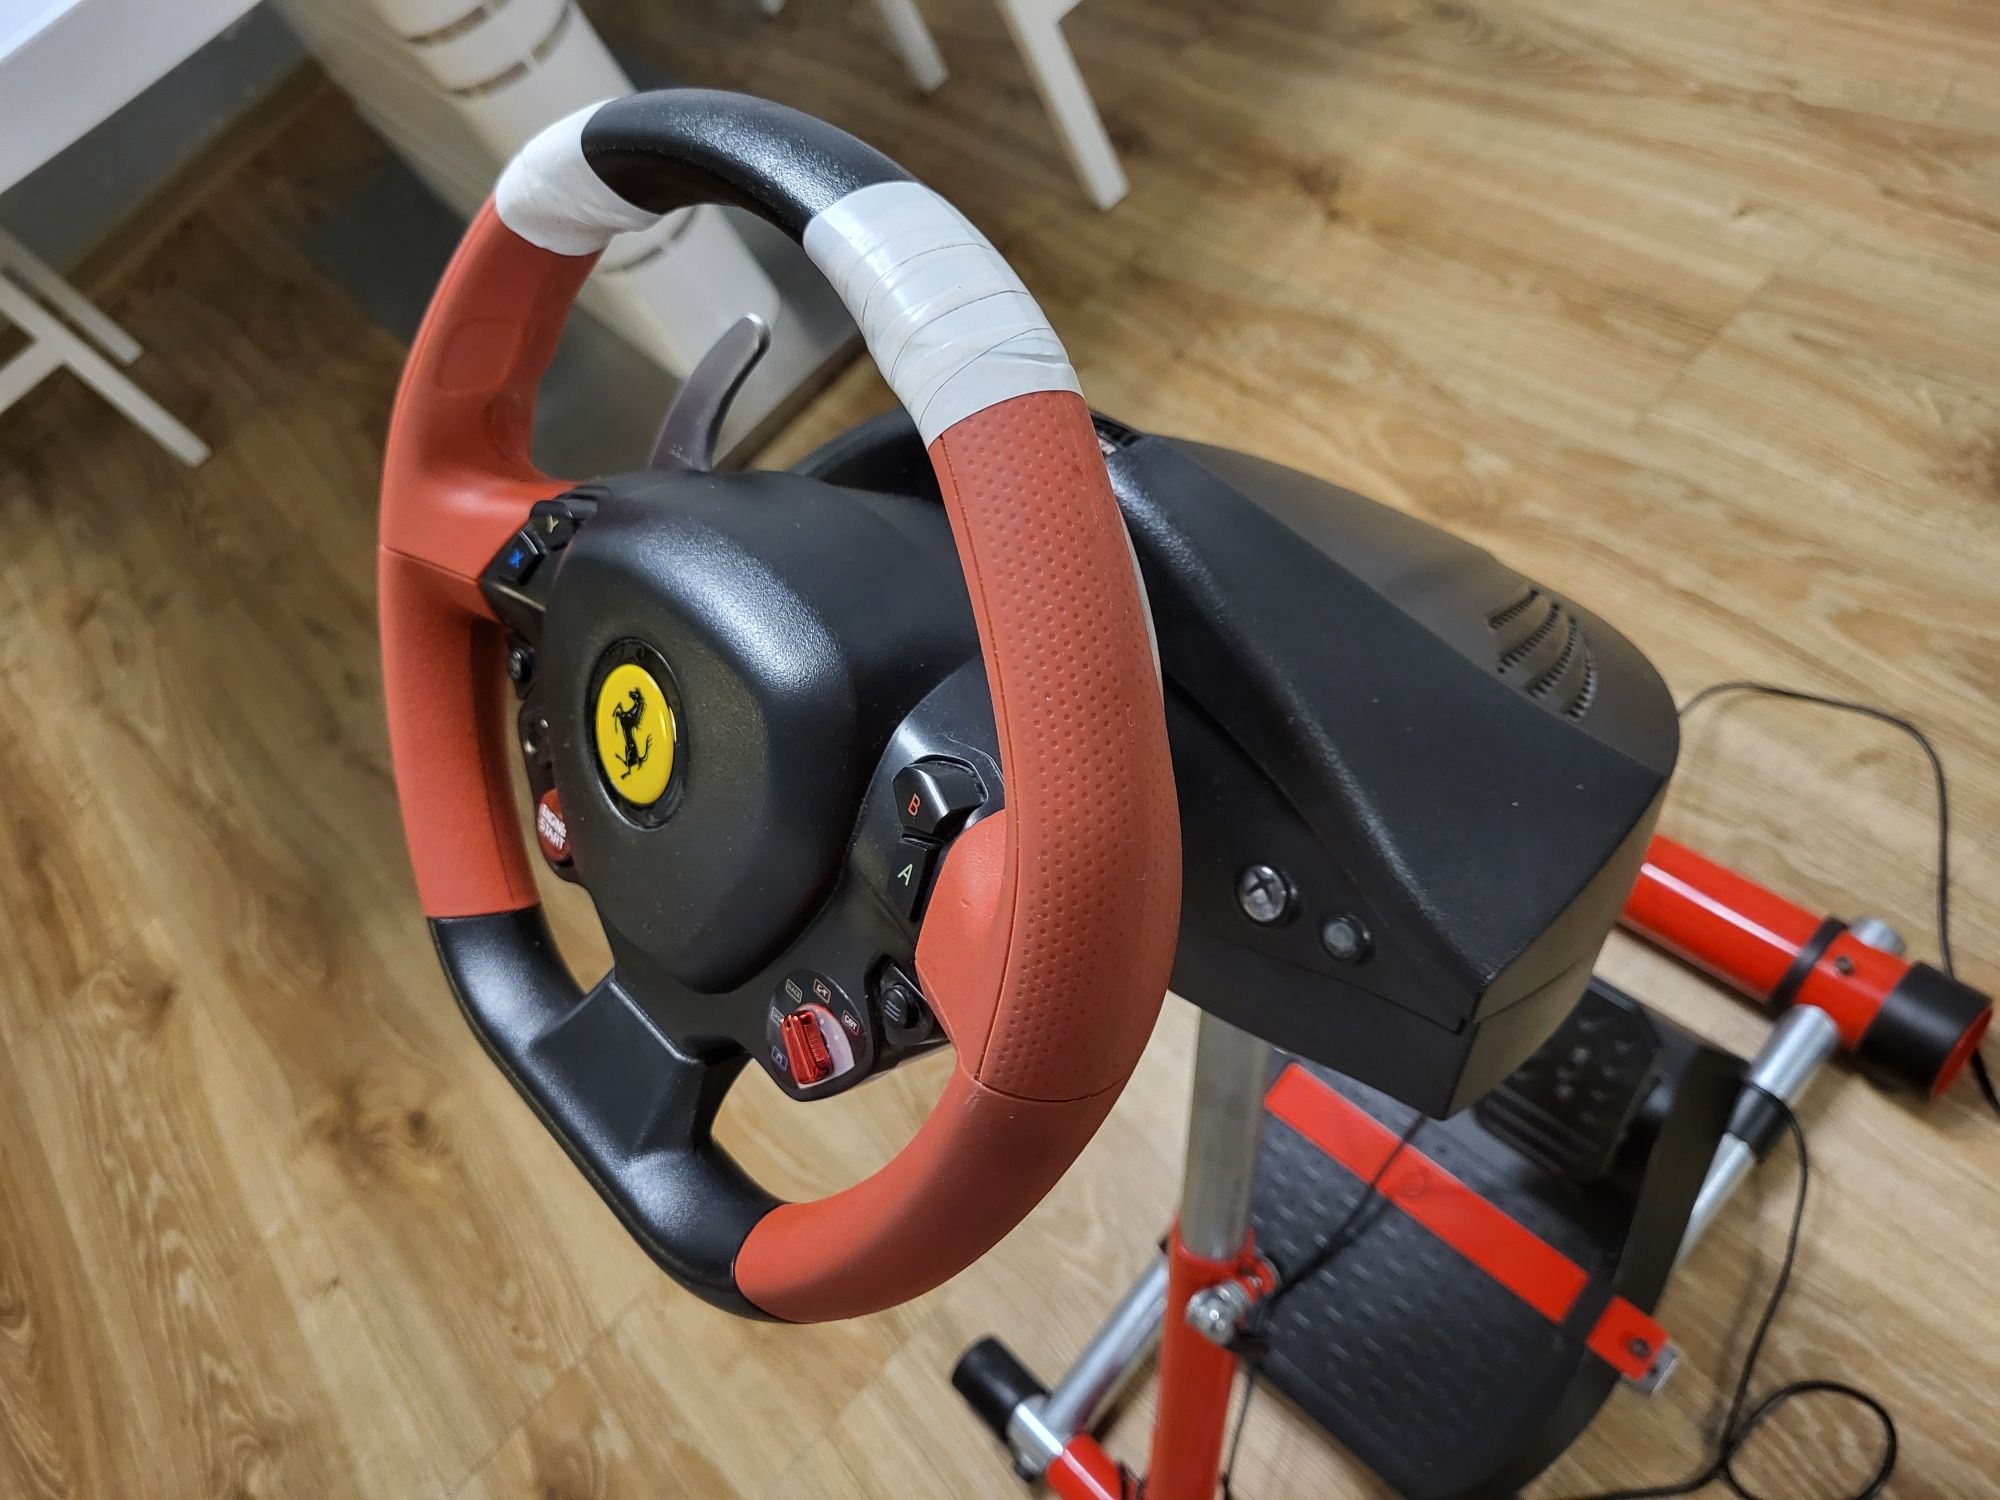 Kierownica THRUSTMASTER Ferrari + stojak + krzesło Entelo gratis